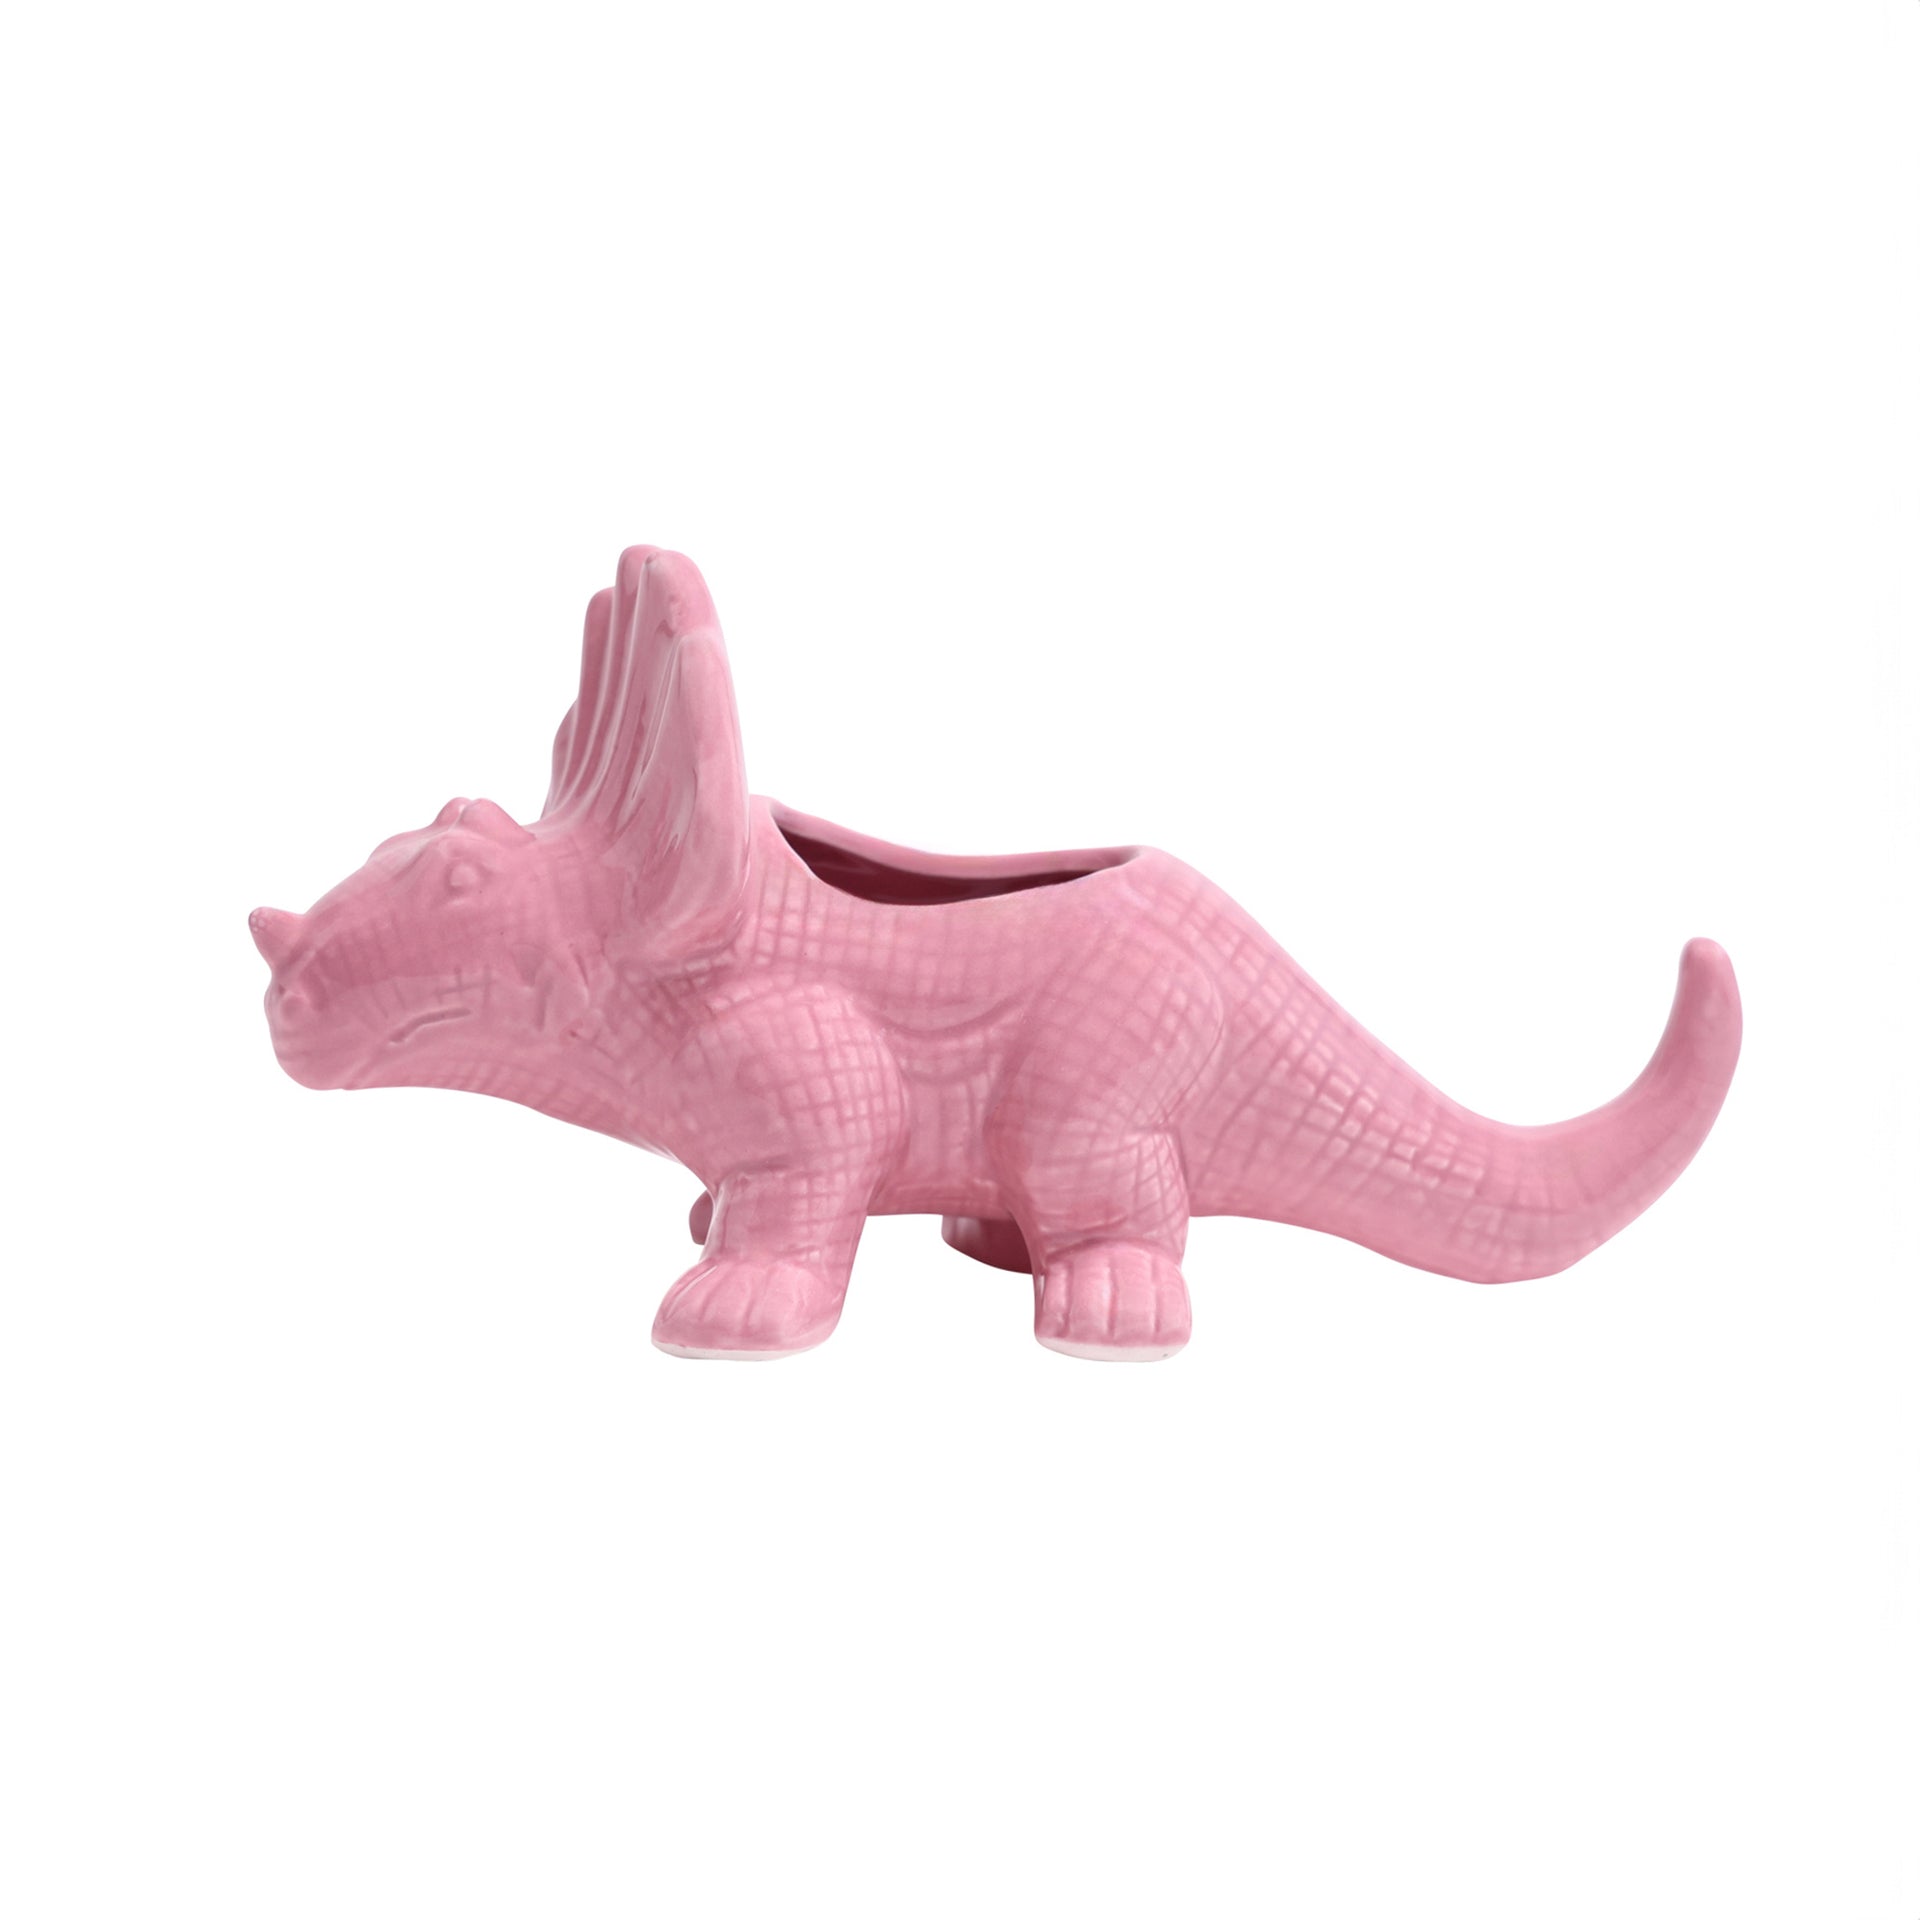 Triceratops Planter: Pink - Chrysler Museum Shop